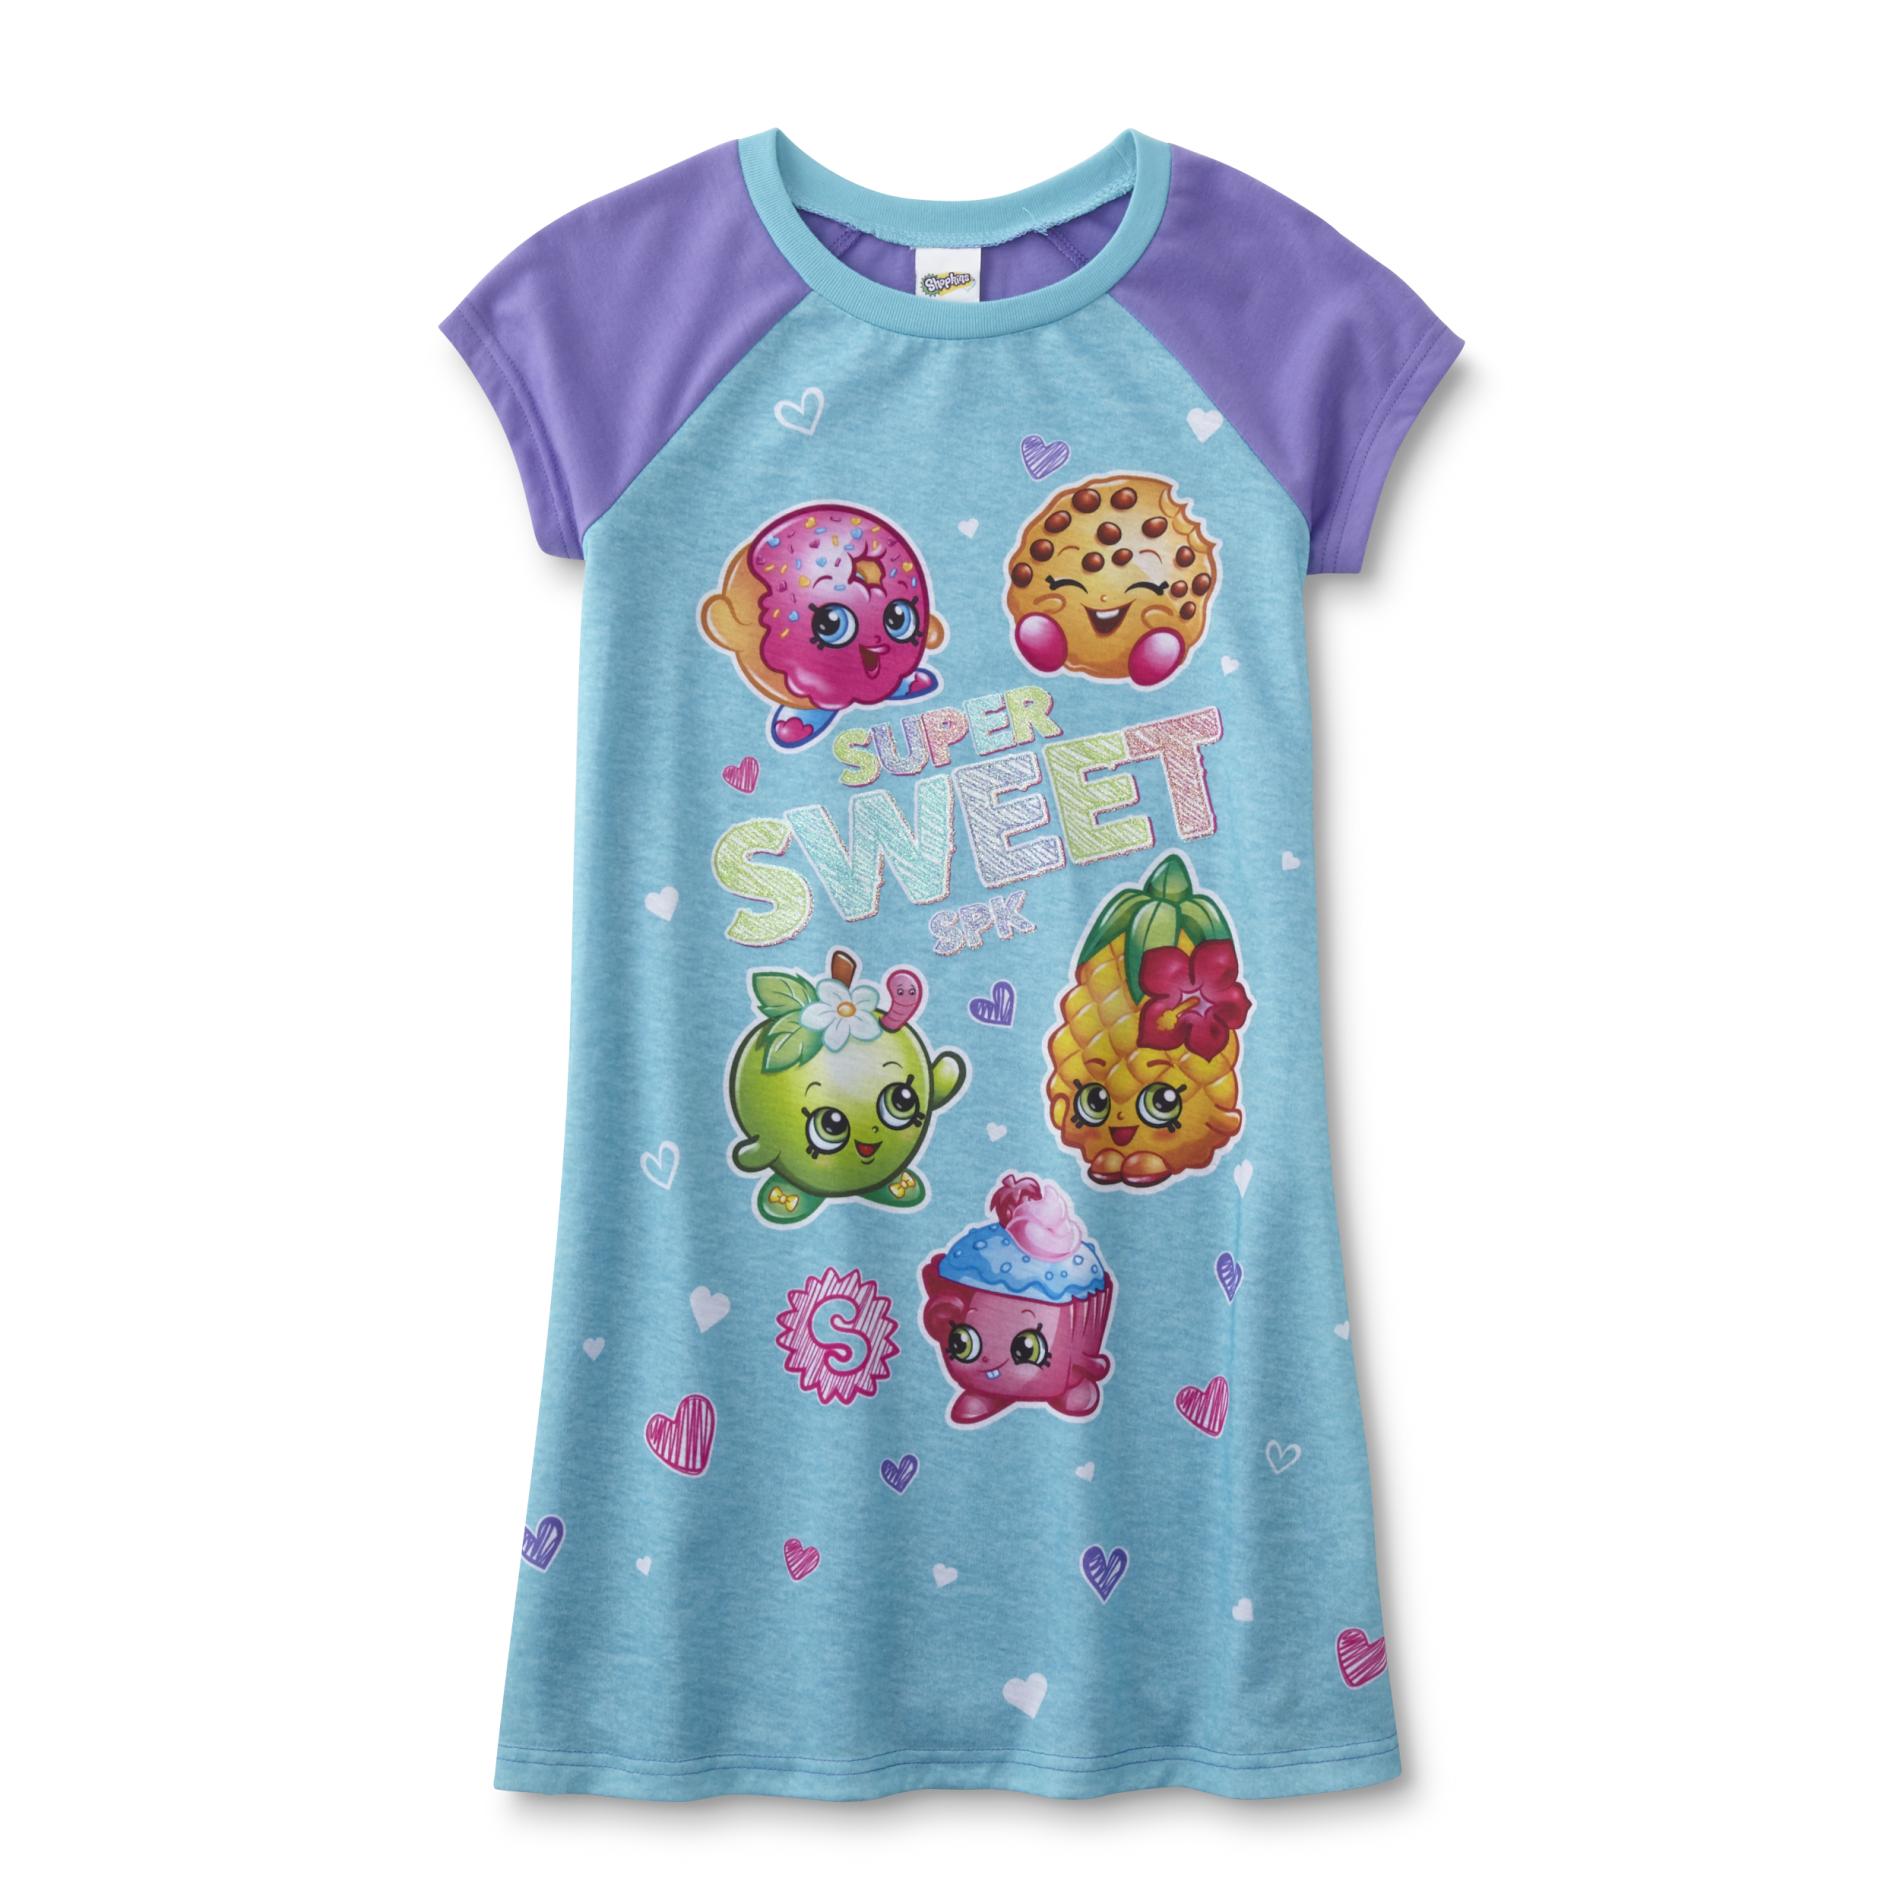 Moose Toys Shopkins Girls' Sleep Shirt - Super Sweet